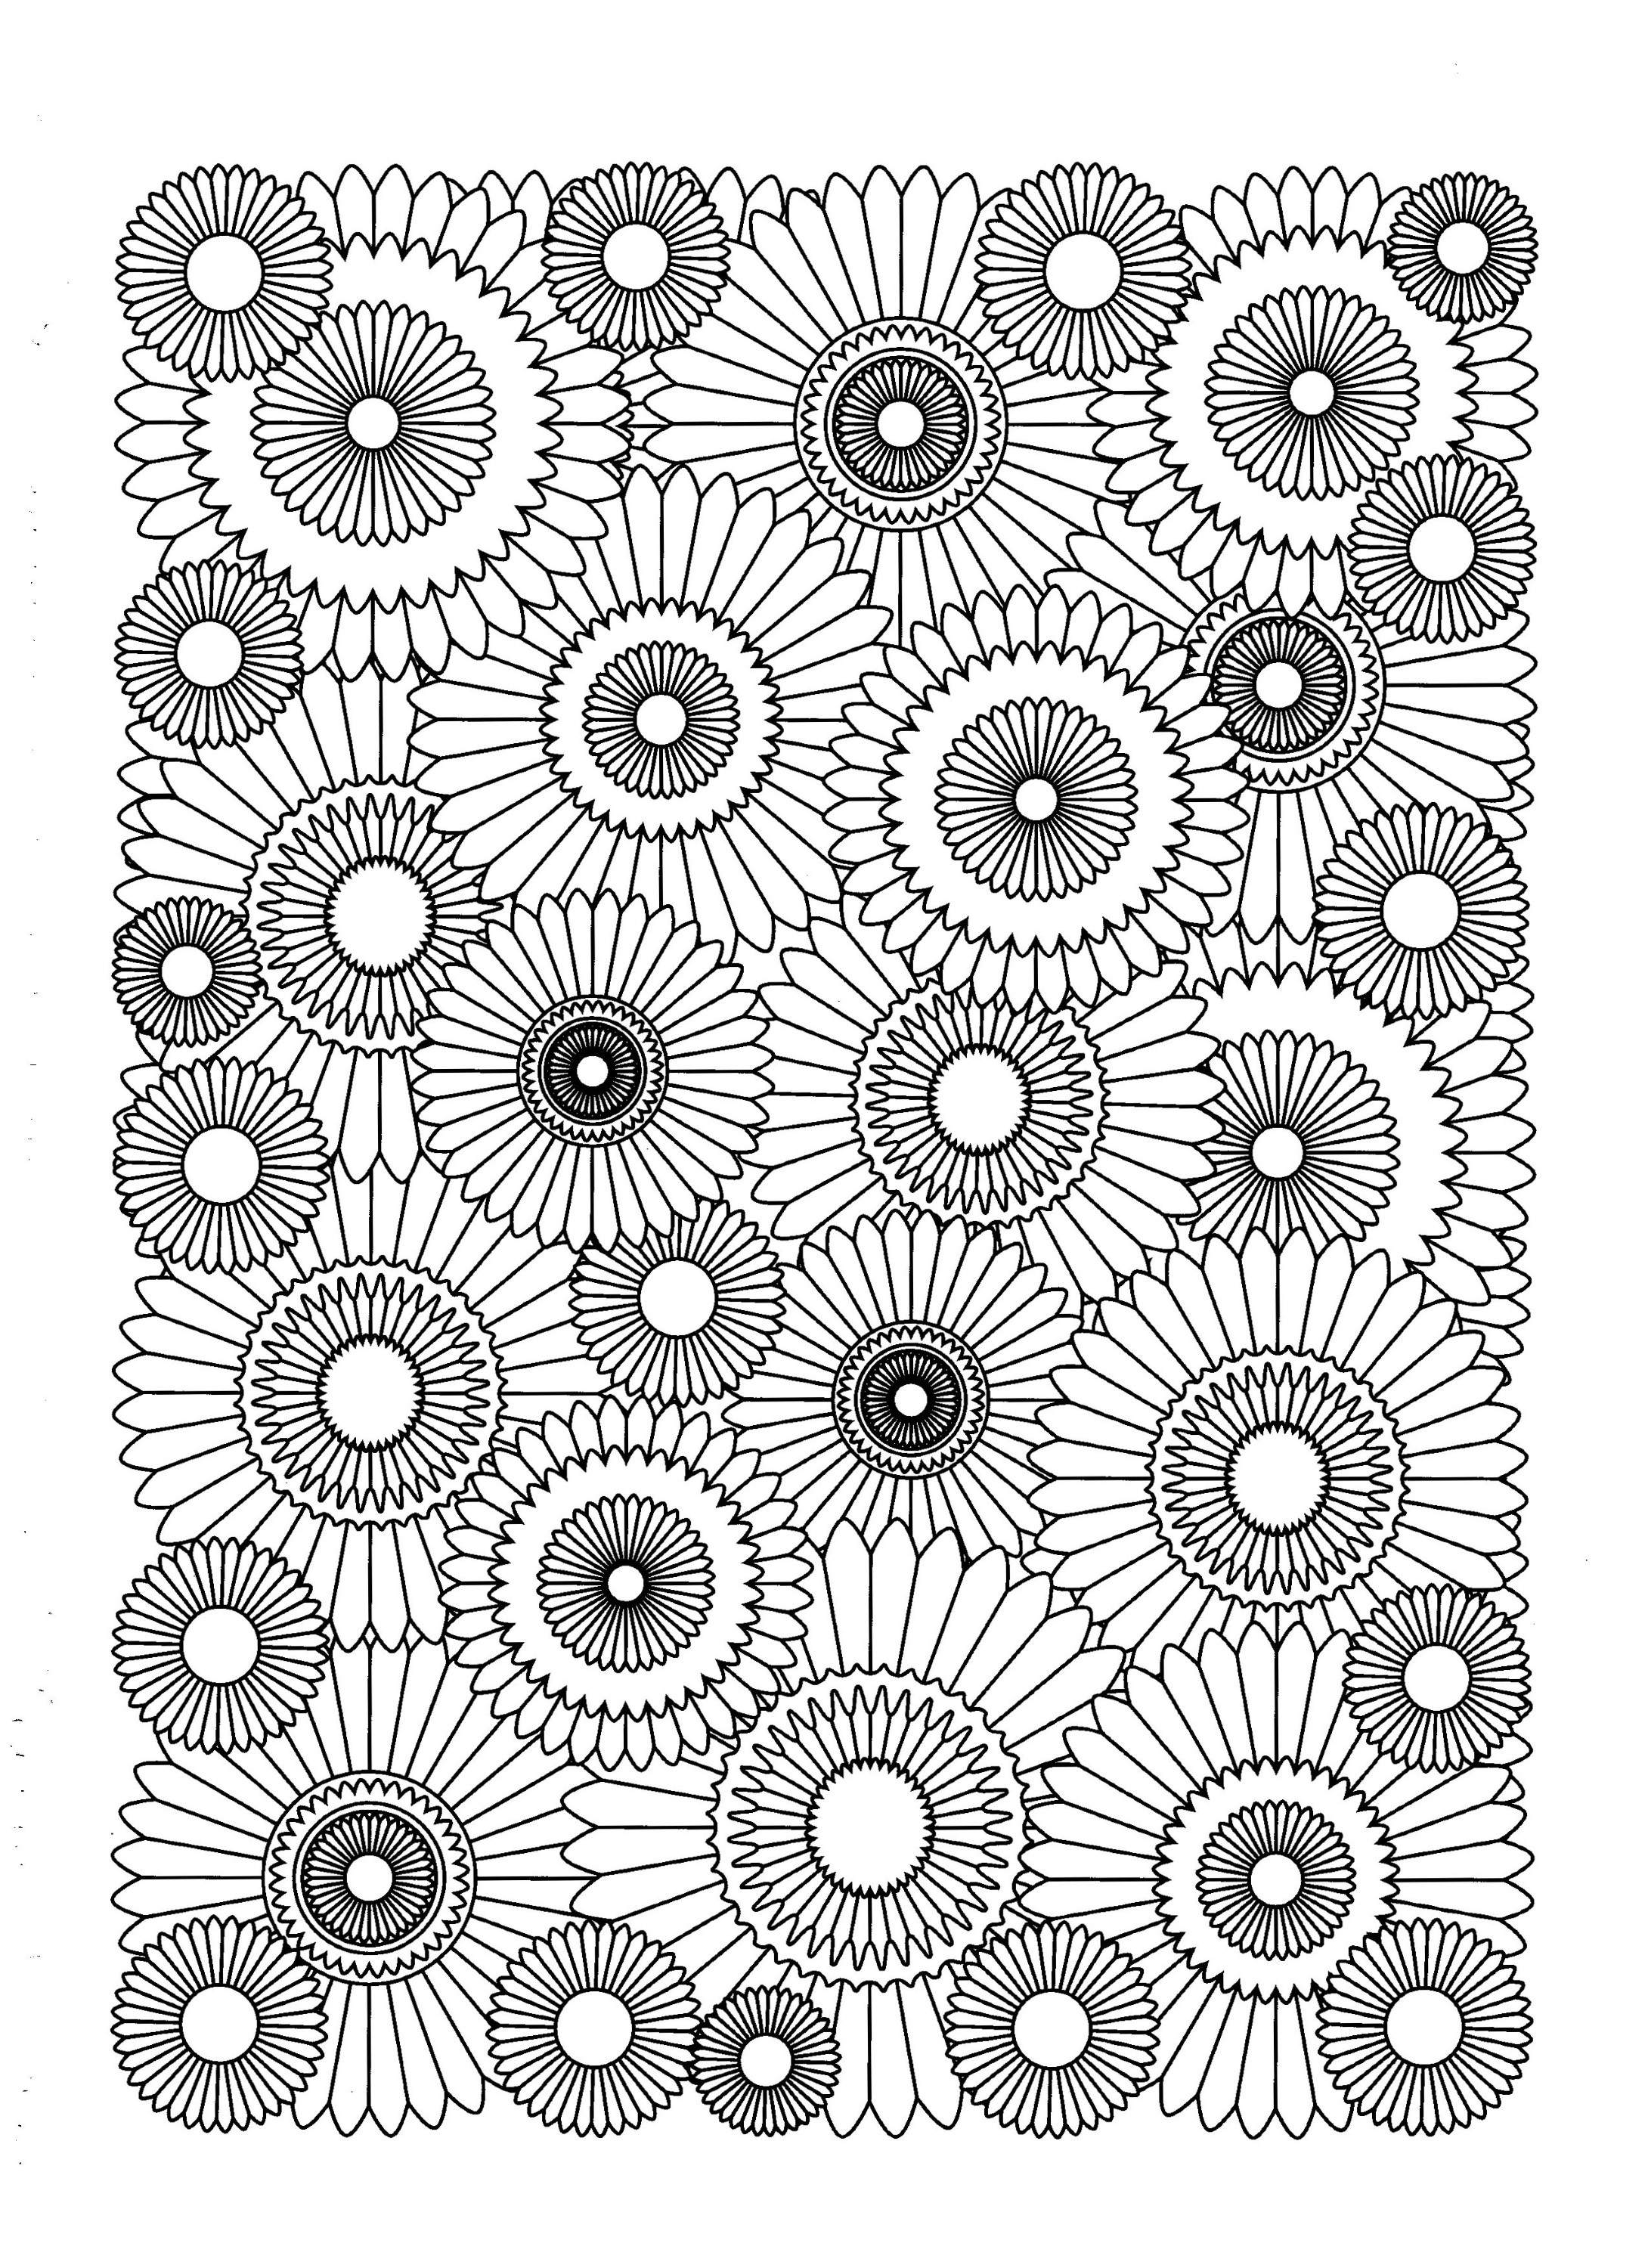 Forme geometriche simili a girasoli